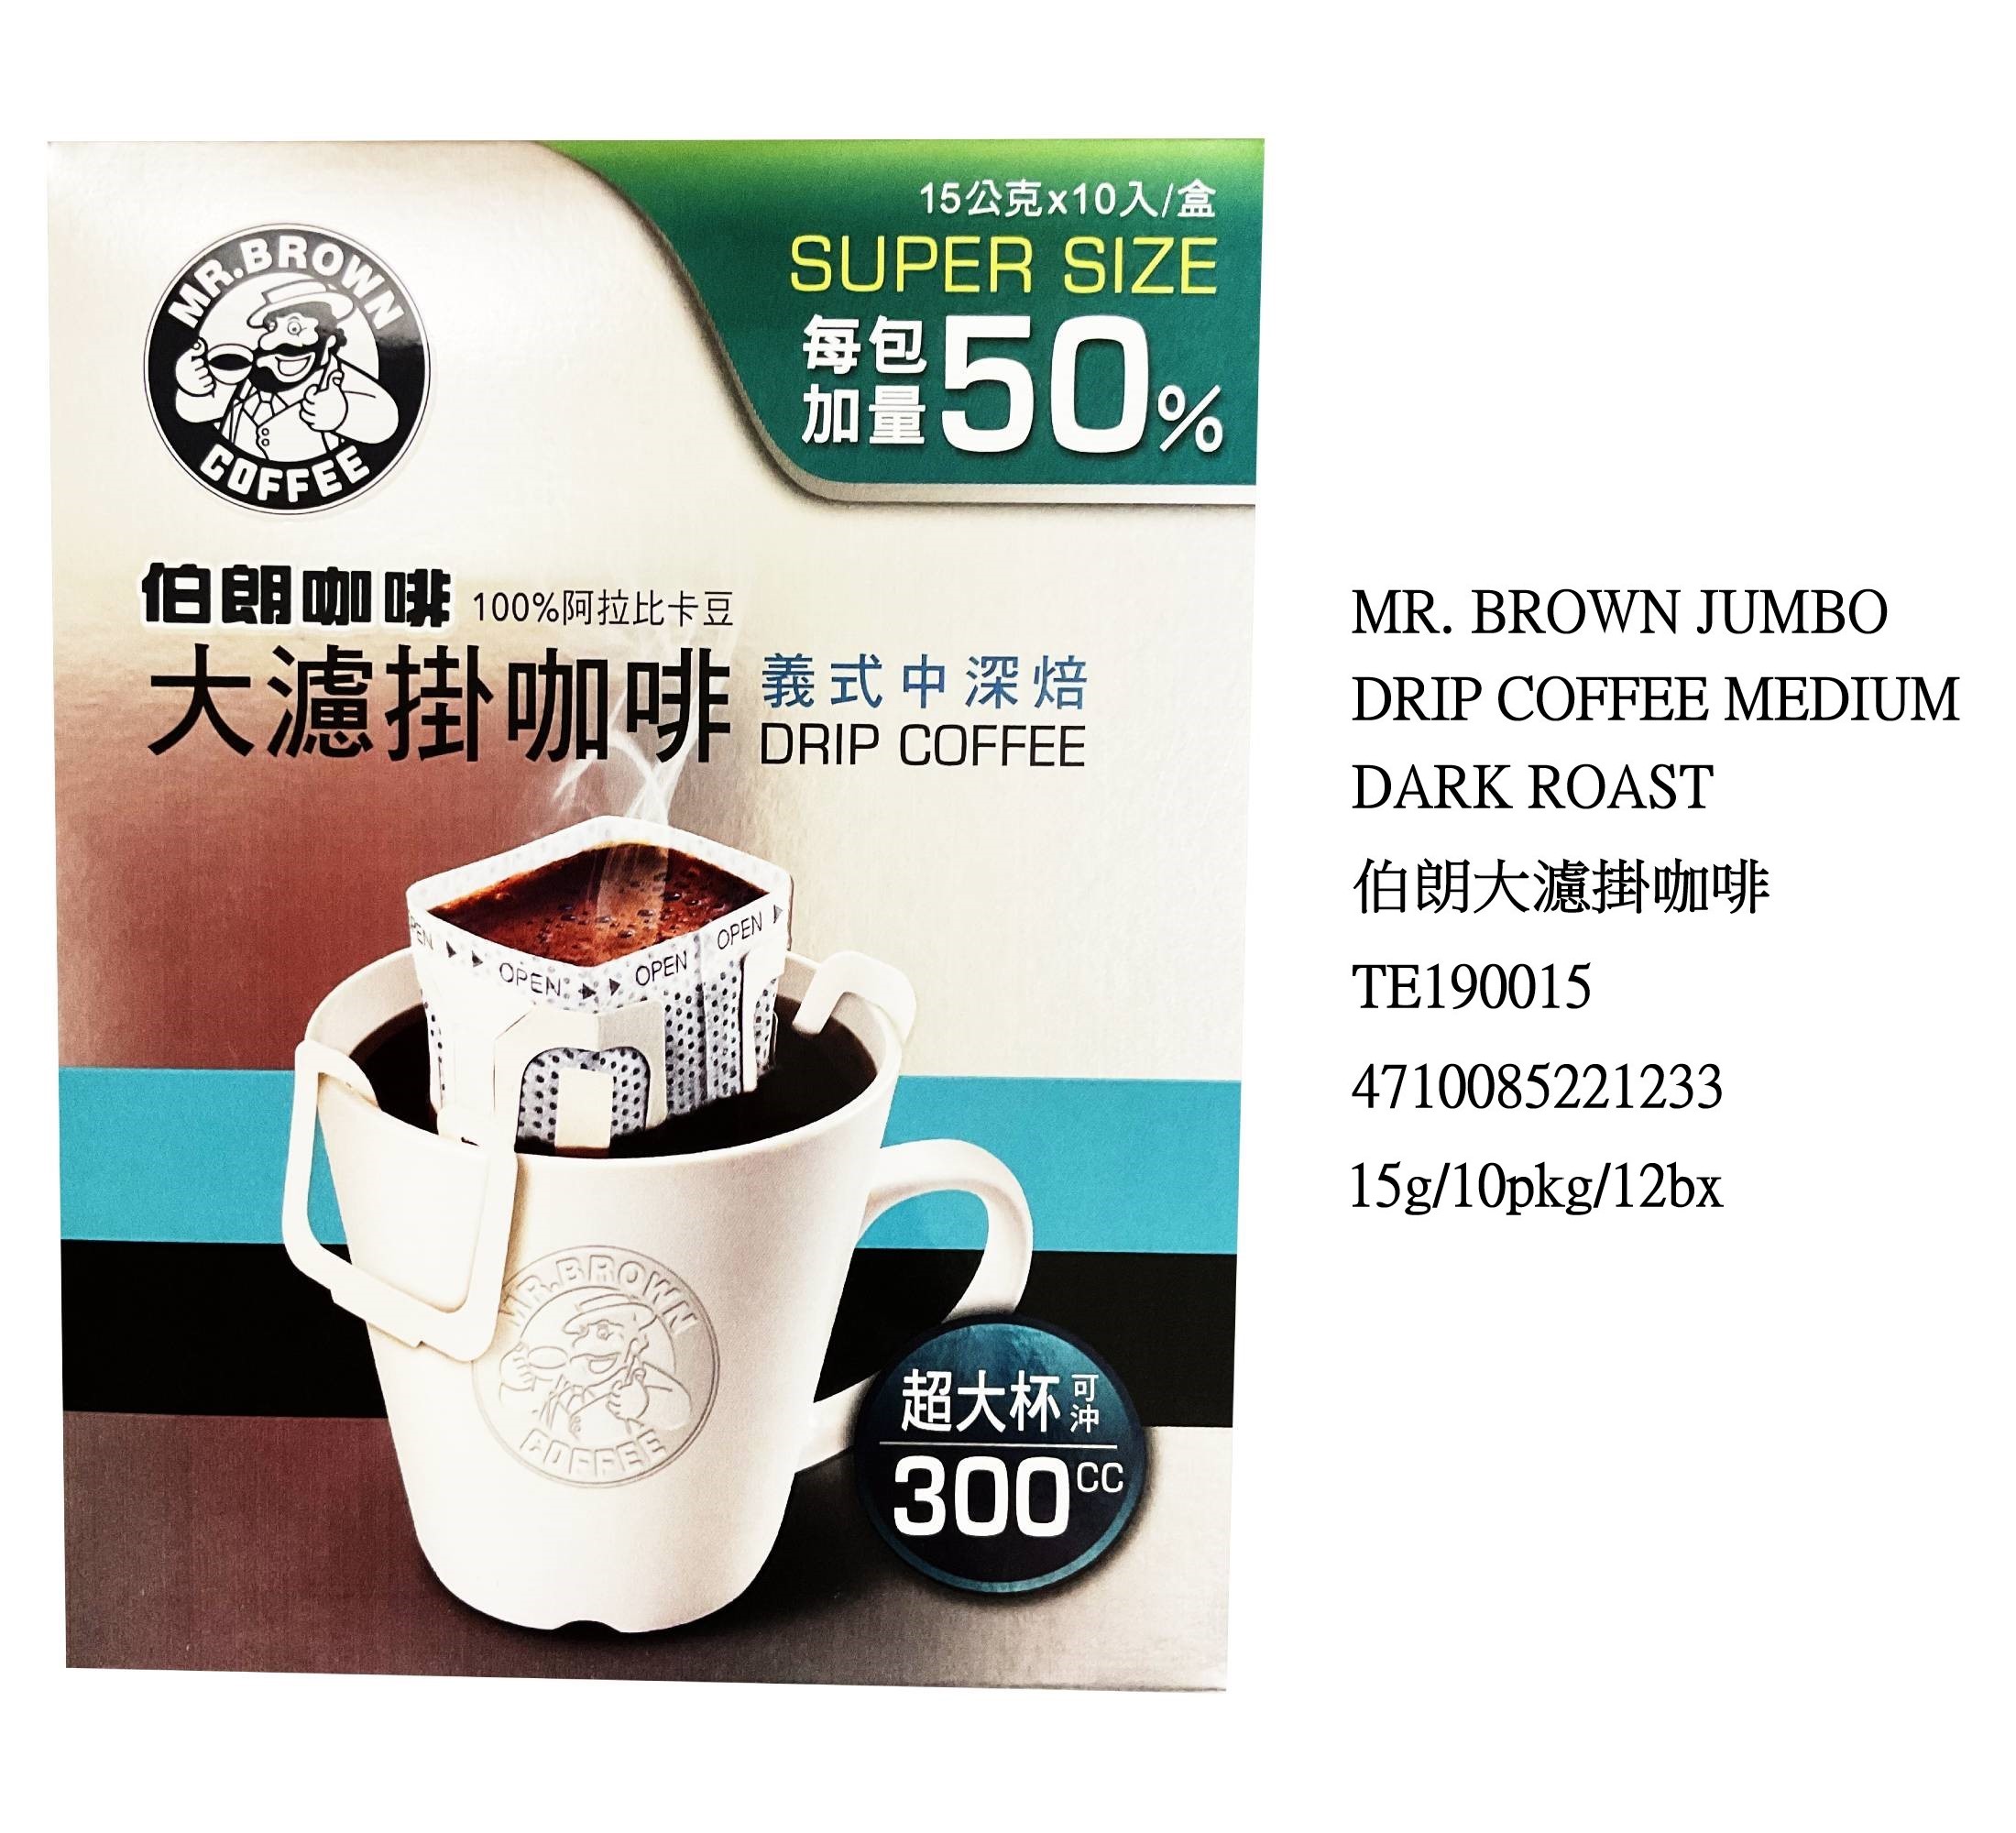 MR. BROWN JUMBO DRIP COFFEE MEDIUM DARK ROAST TE190015